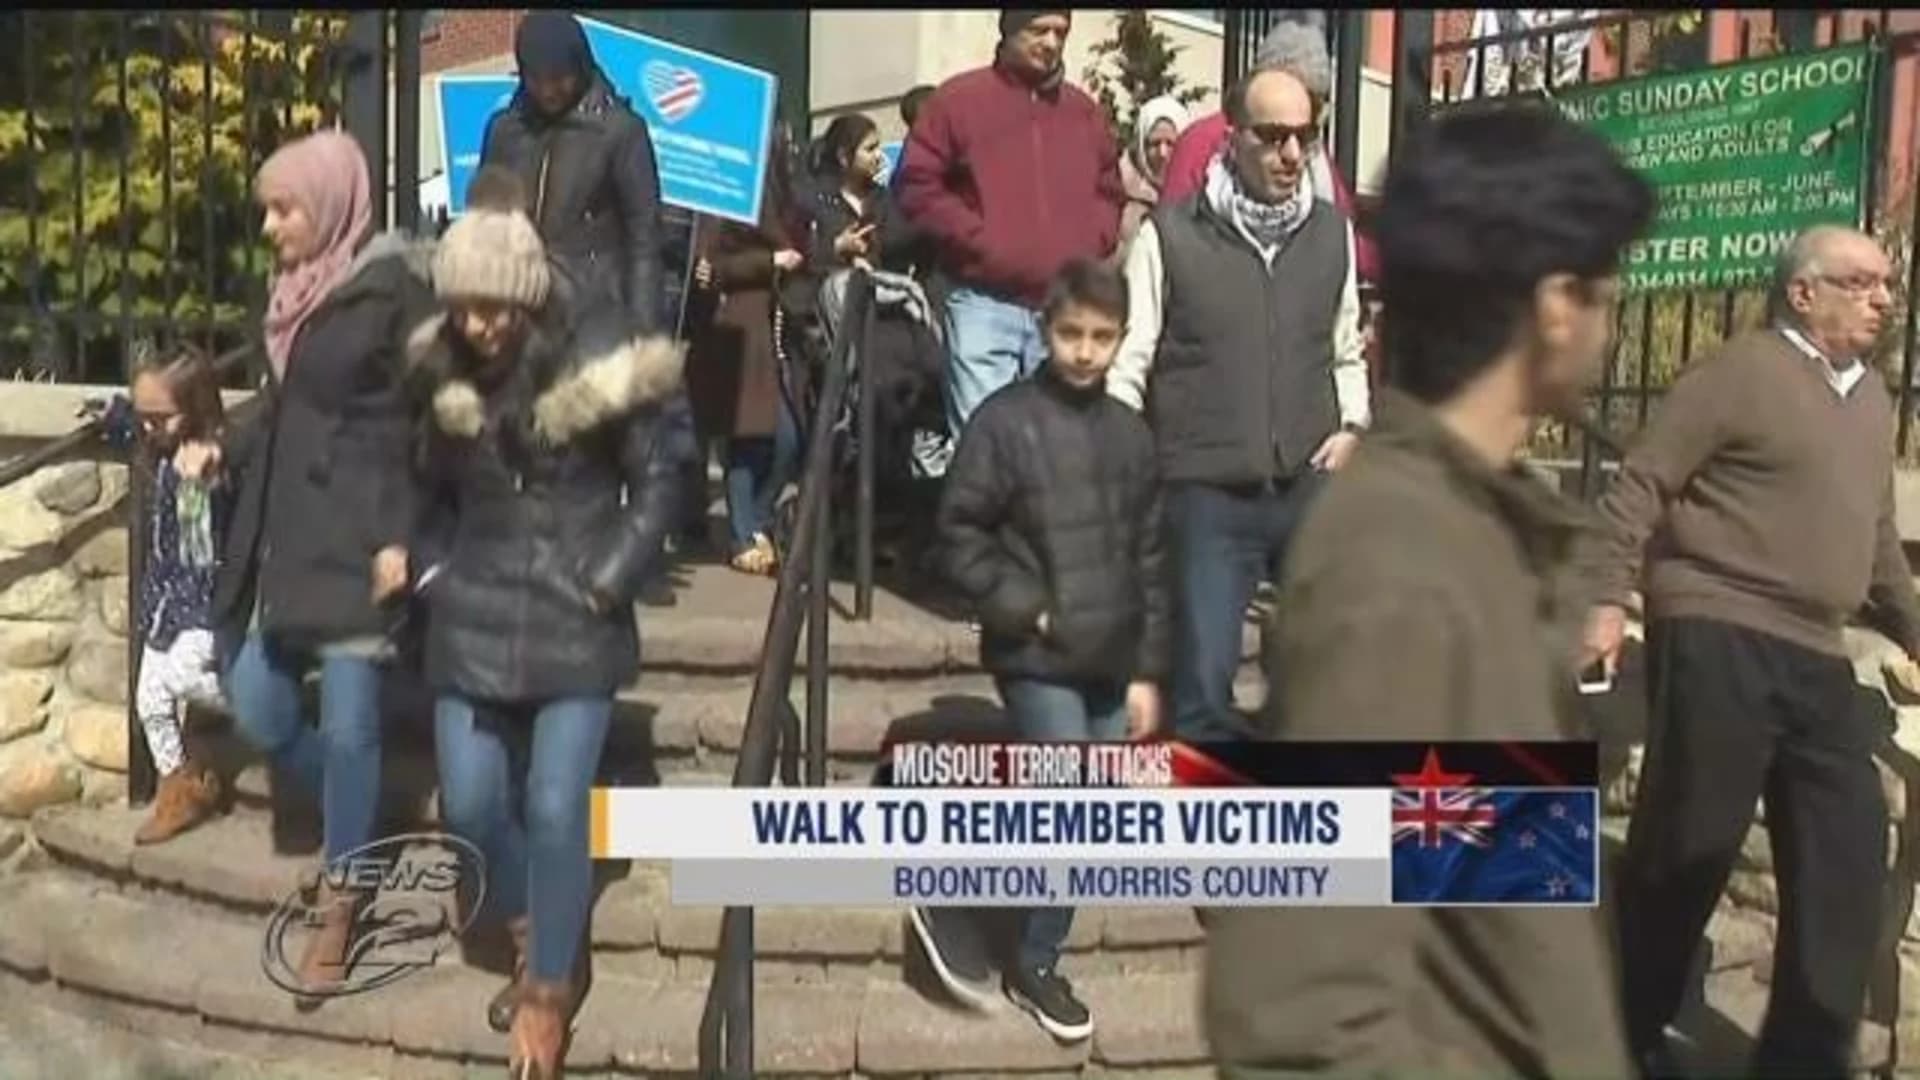 Community members honor New Zealand attack victims in walk, prayer